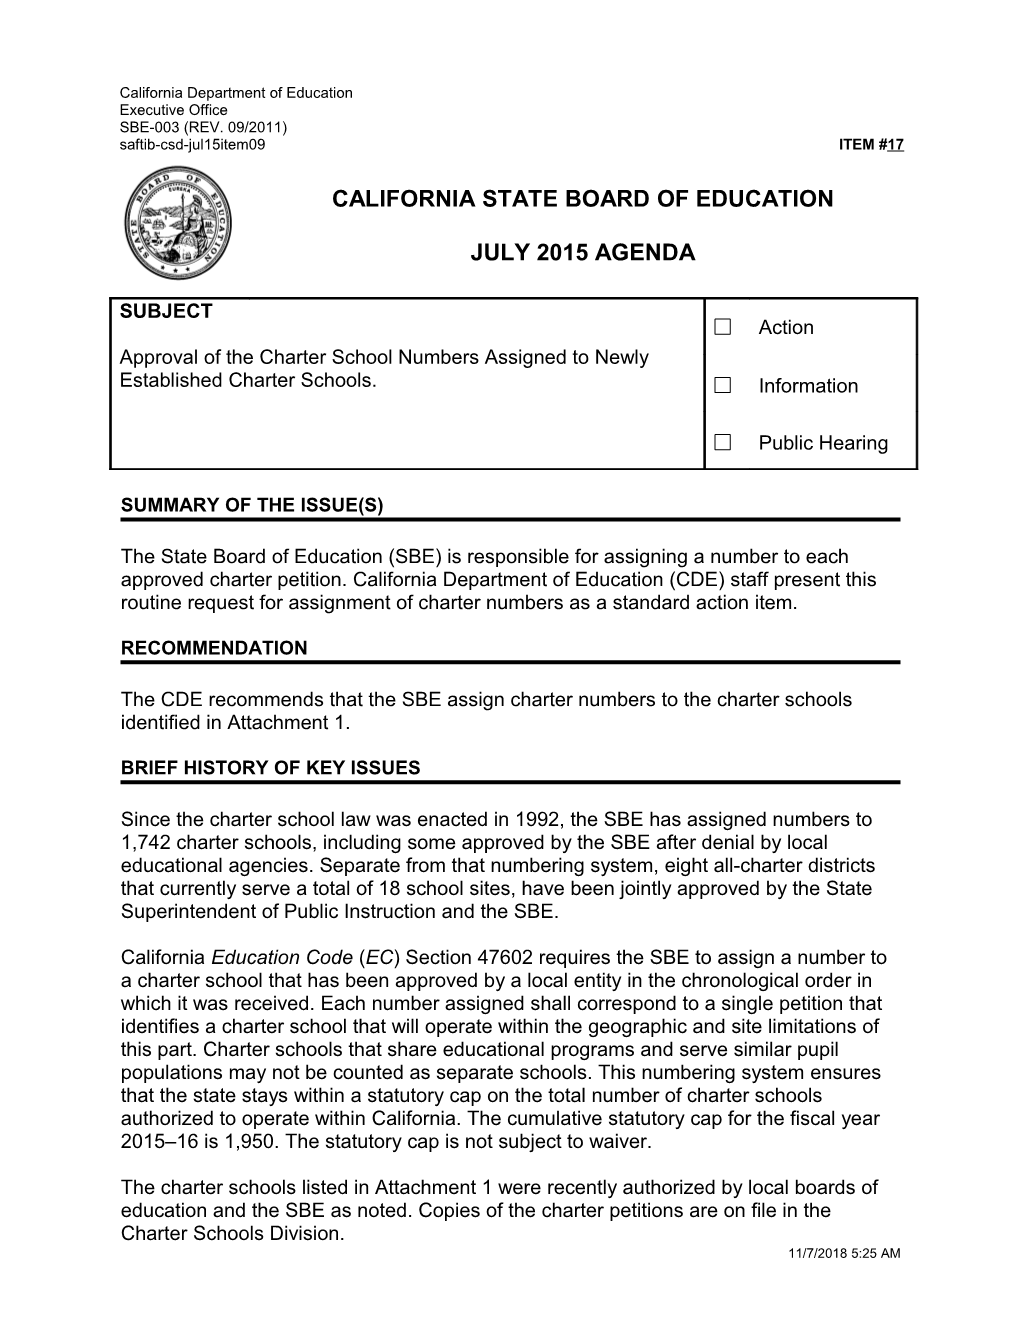 July 2015 Agenda Item 17 - Meeting Agendas (CA State Board of Education)